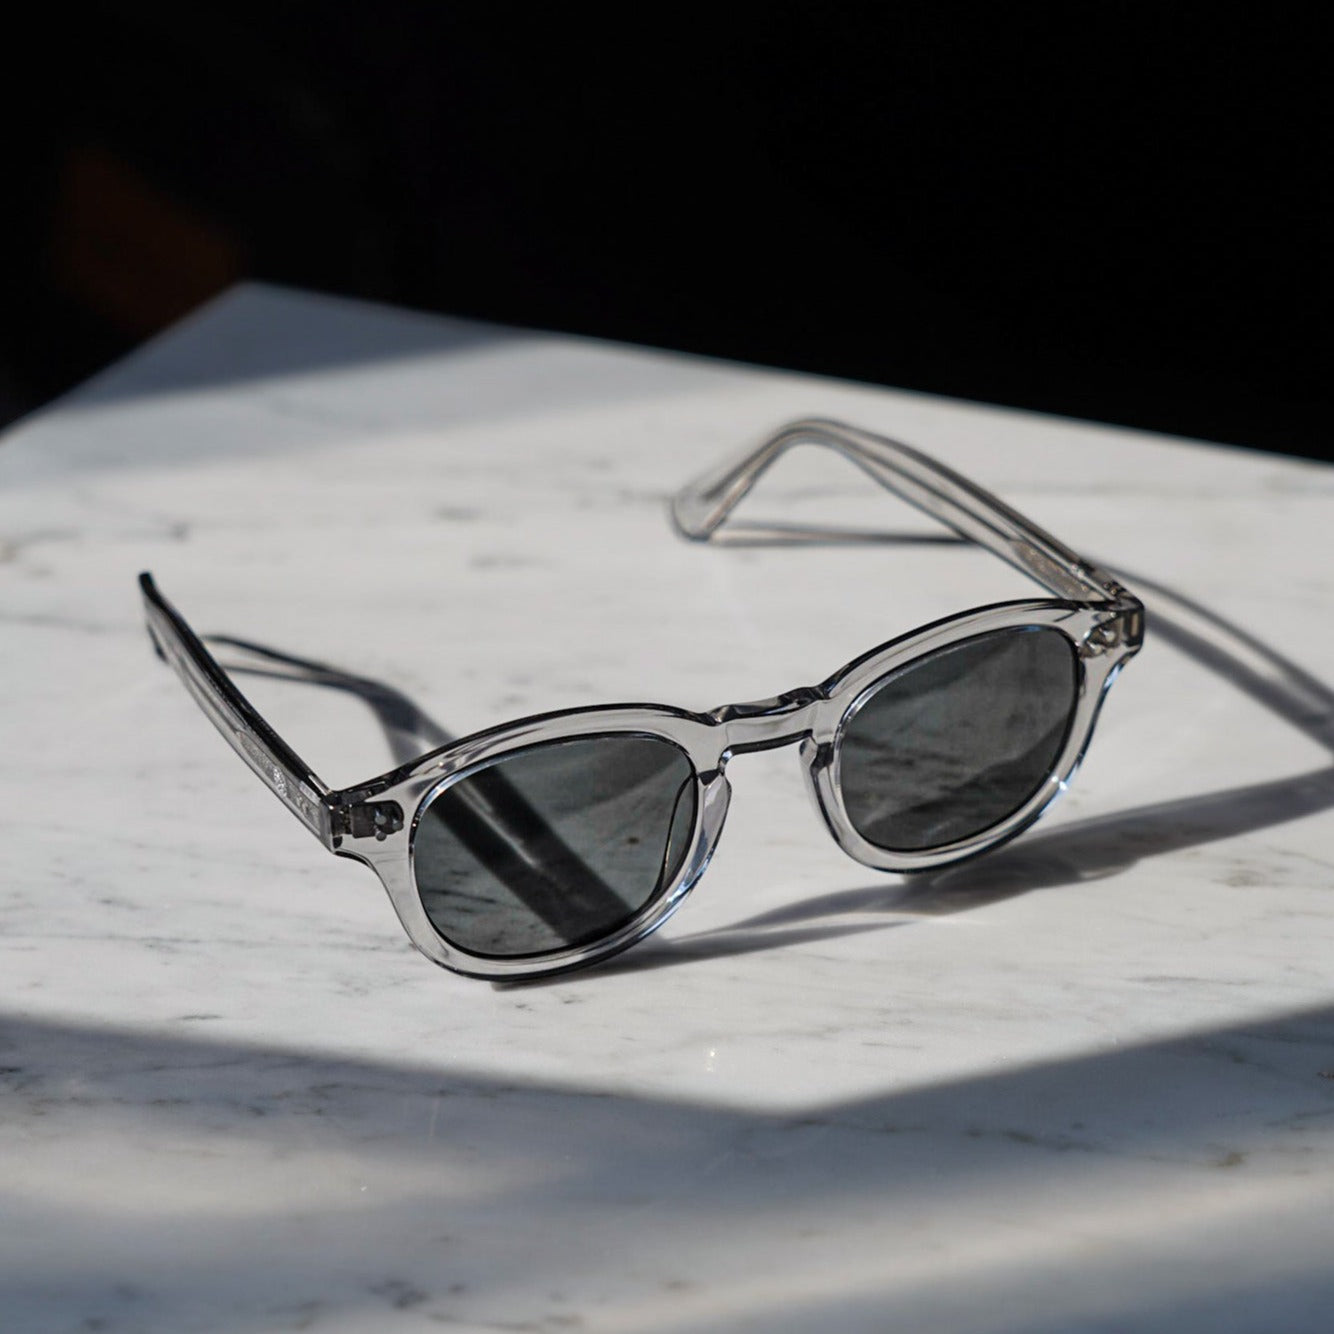 Legacy sunglasses - Transparent grey